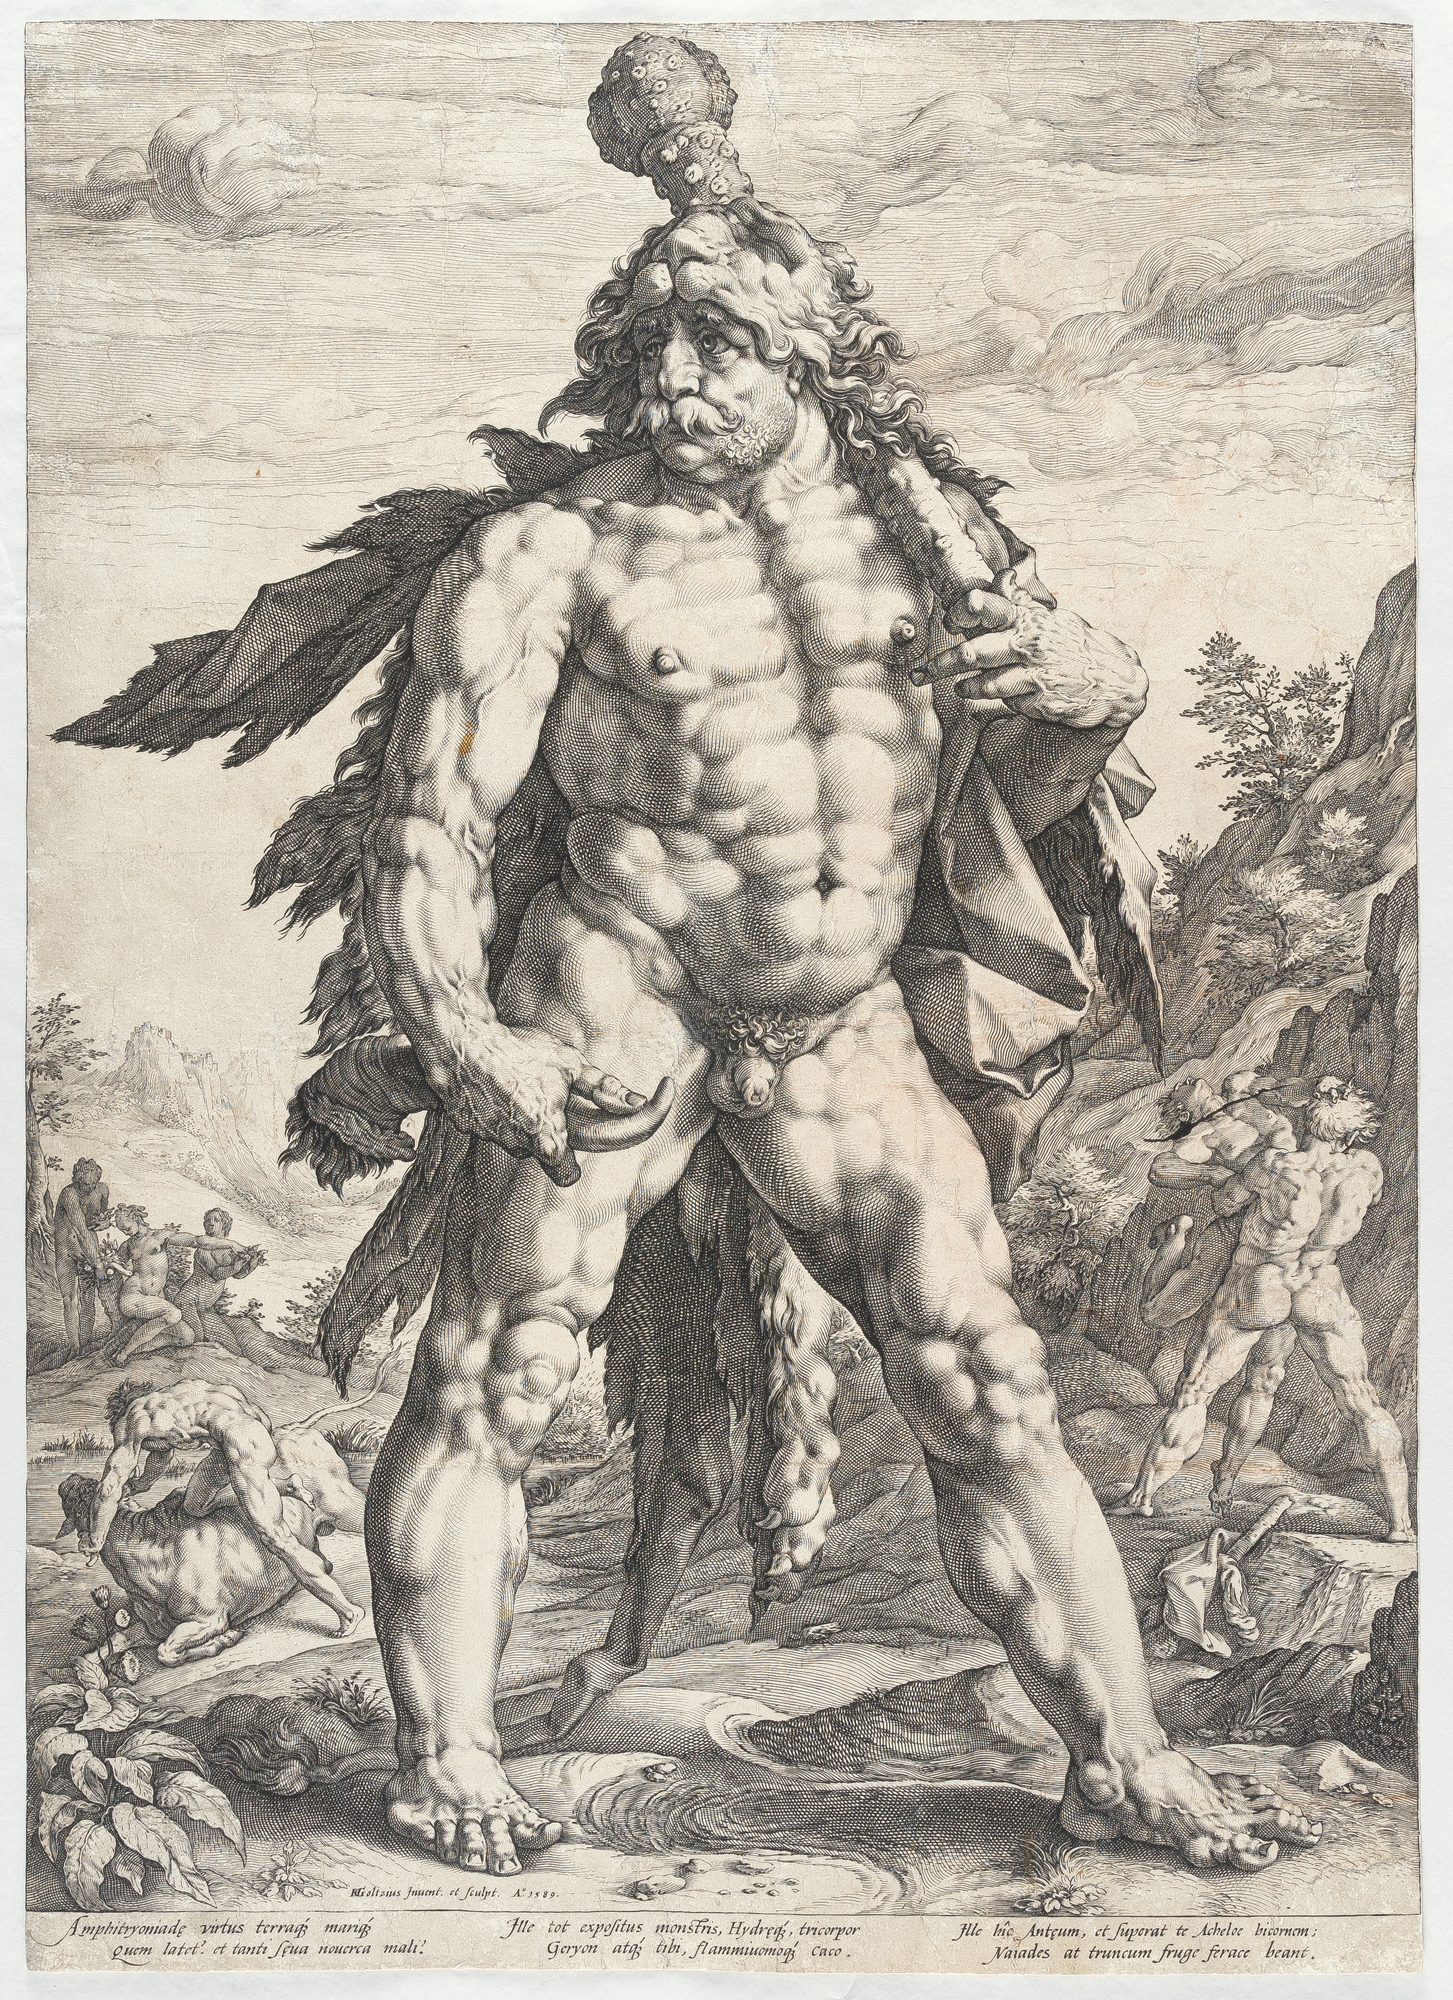 The great Hercules by Hendrick Goltzius, 1589